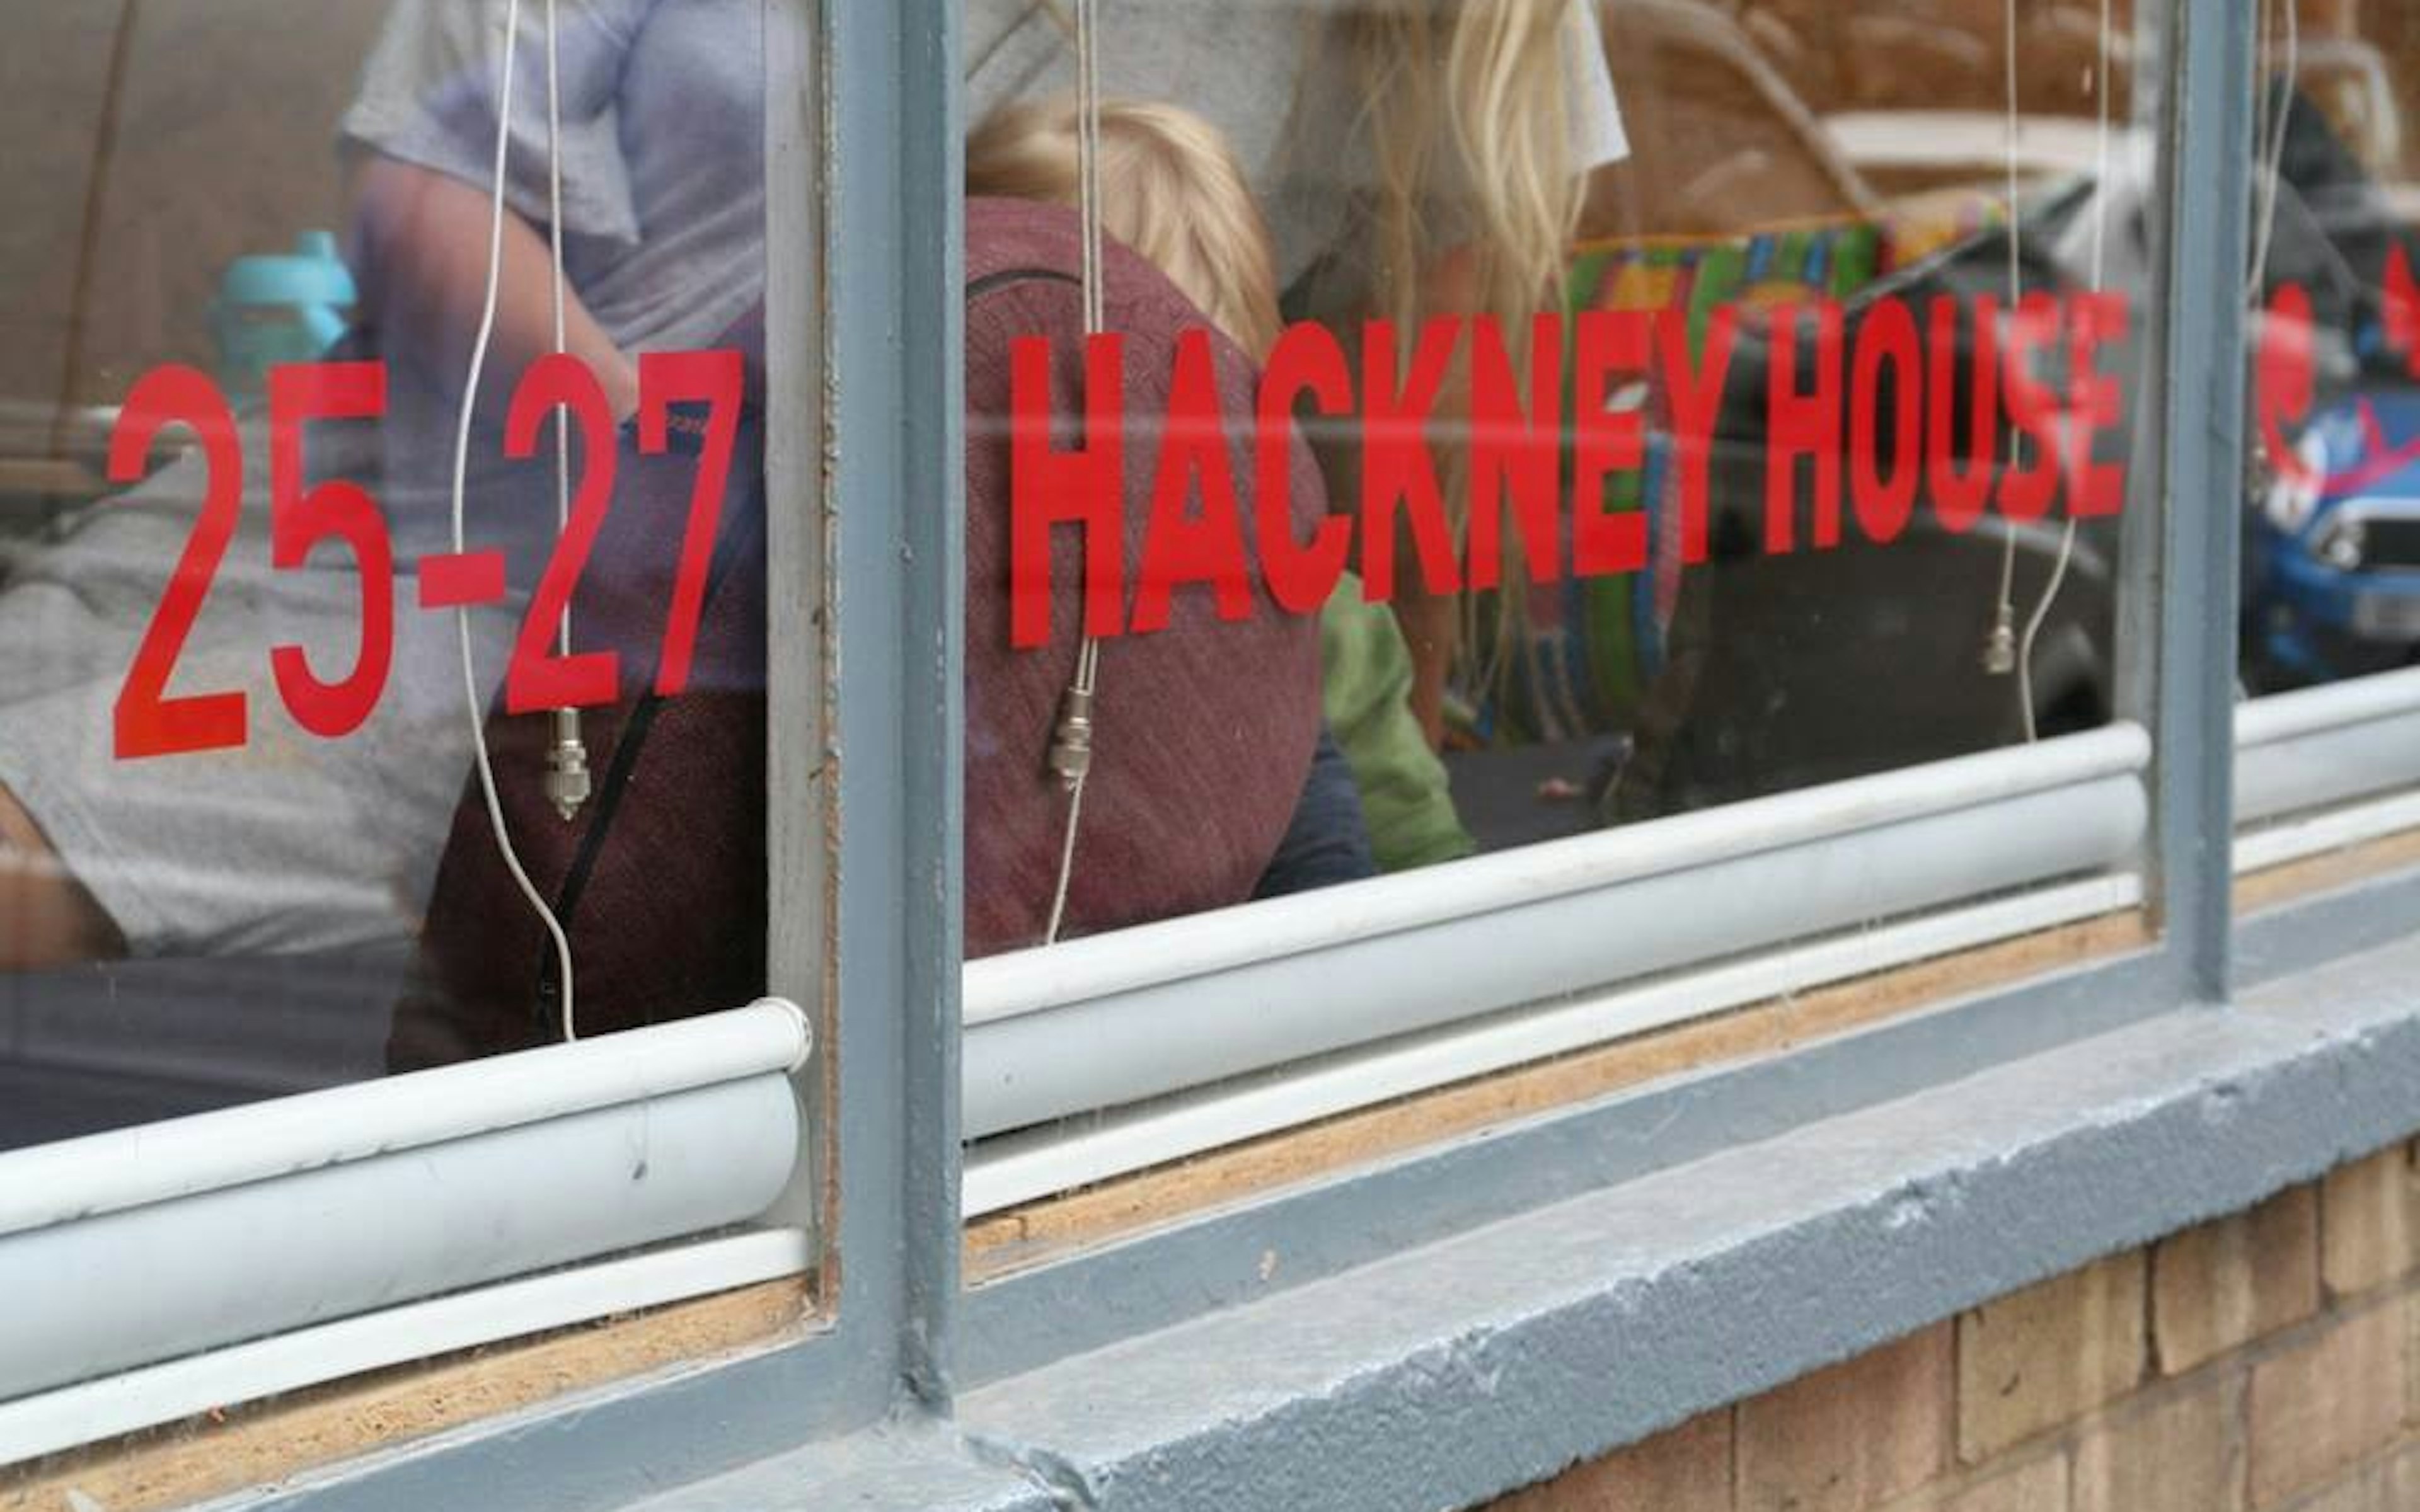 Hackney House - image